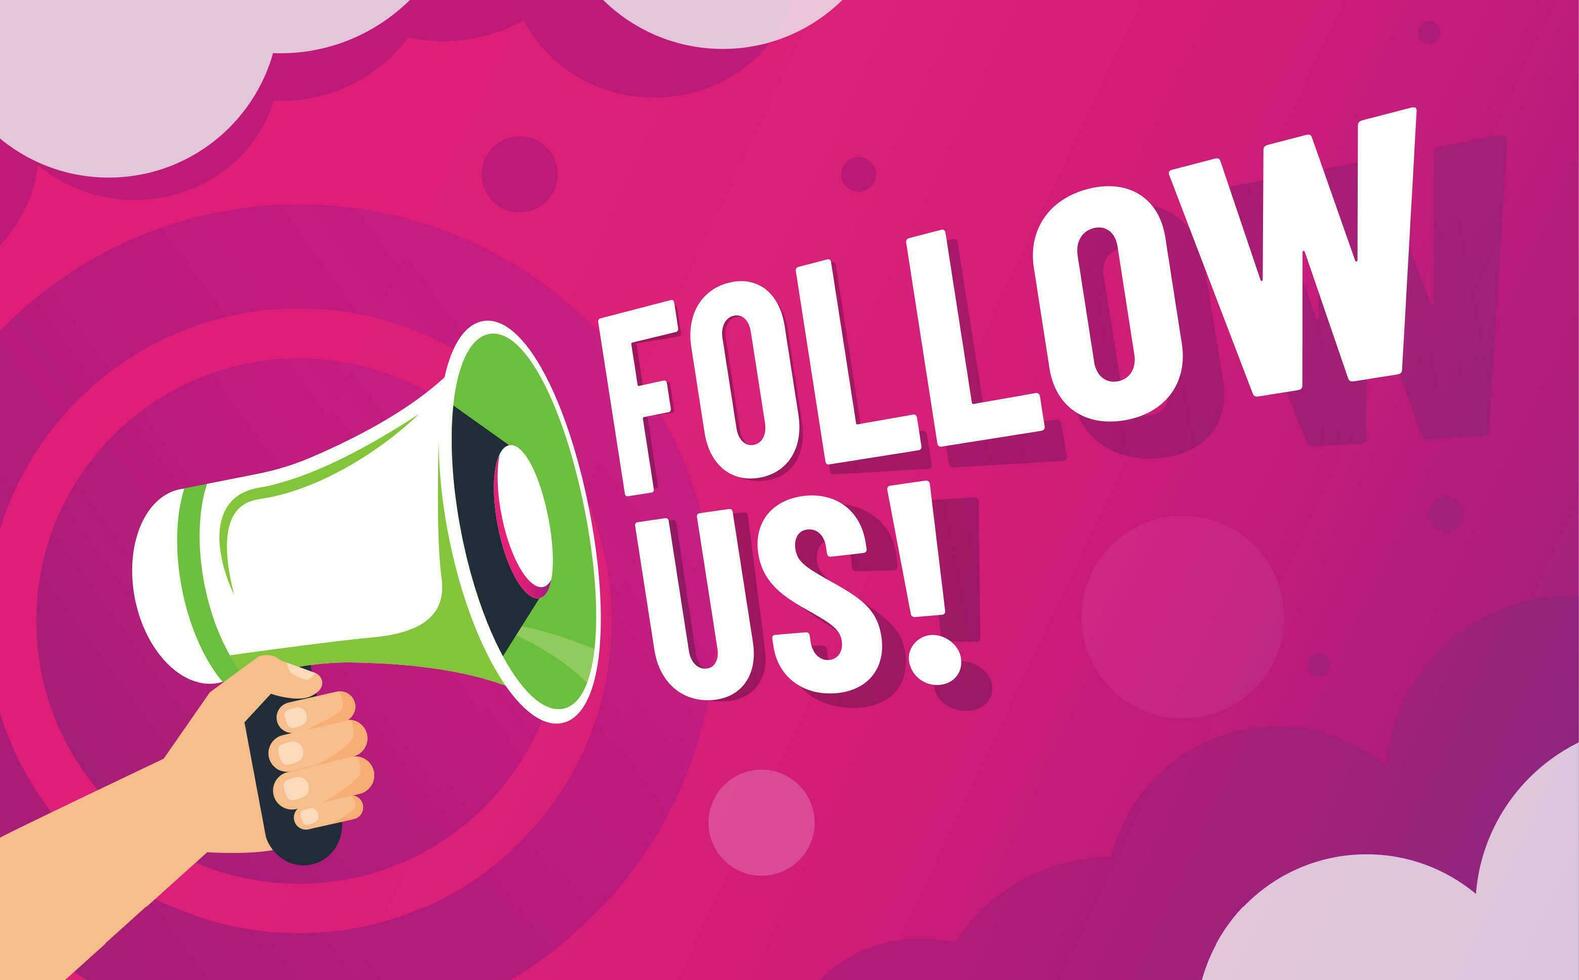 Follow us banner. Loudspeaker in hand invite followers, online social media brand communication and following vector illustration